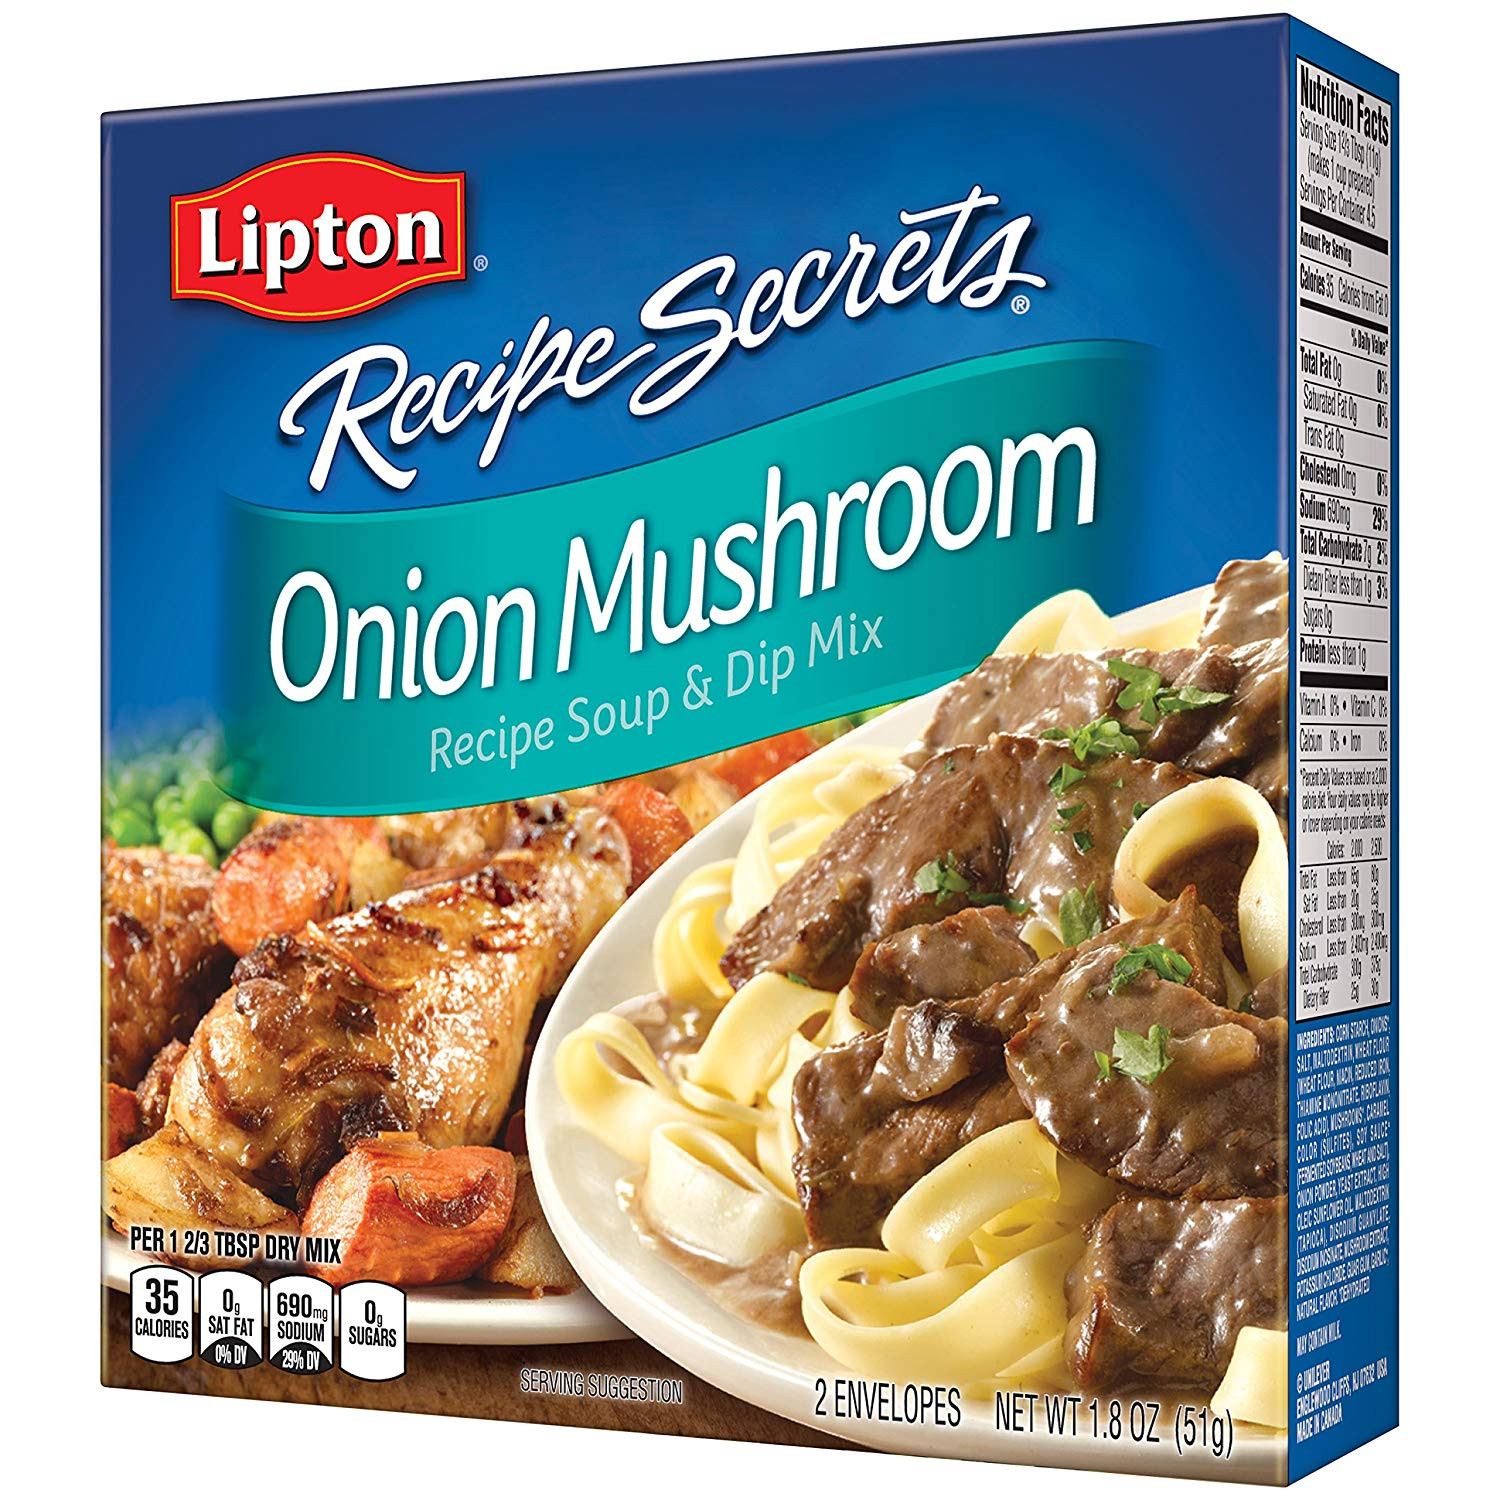 Lipton Onion Soup Mix Meatloaf Recipe
 Meatloaf Recipe With Lipton ion Mushroom Soup Mix